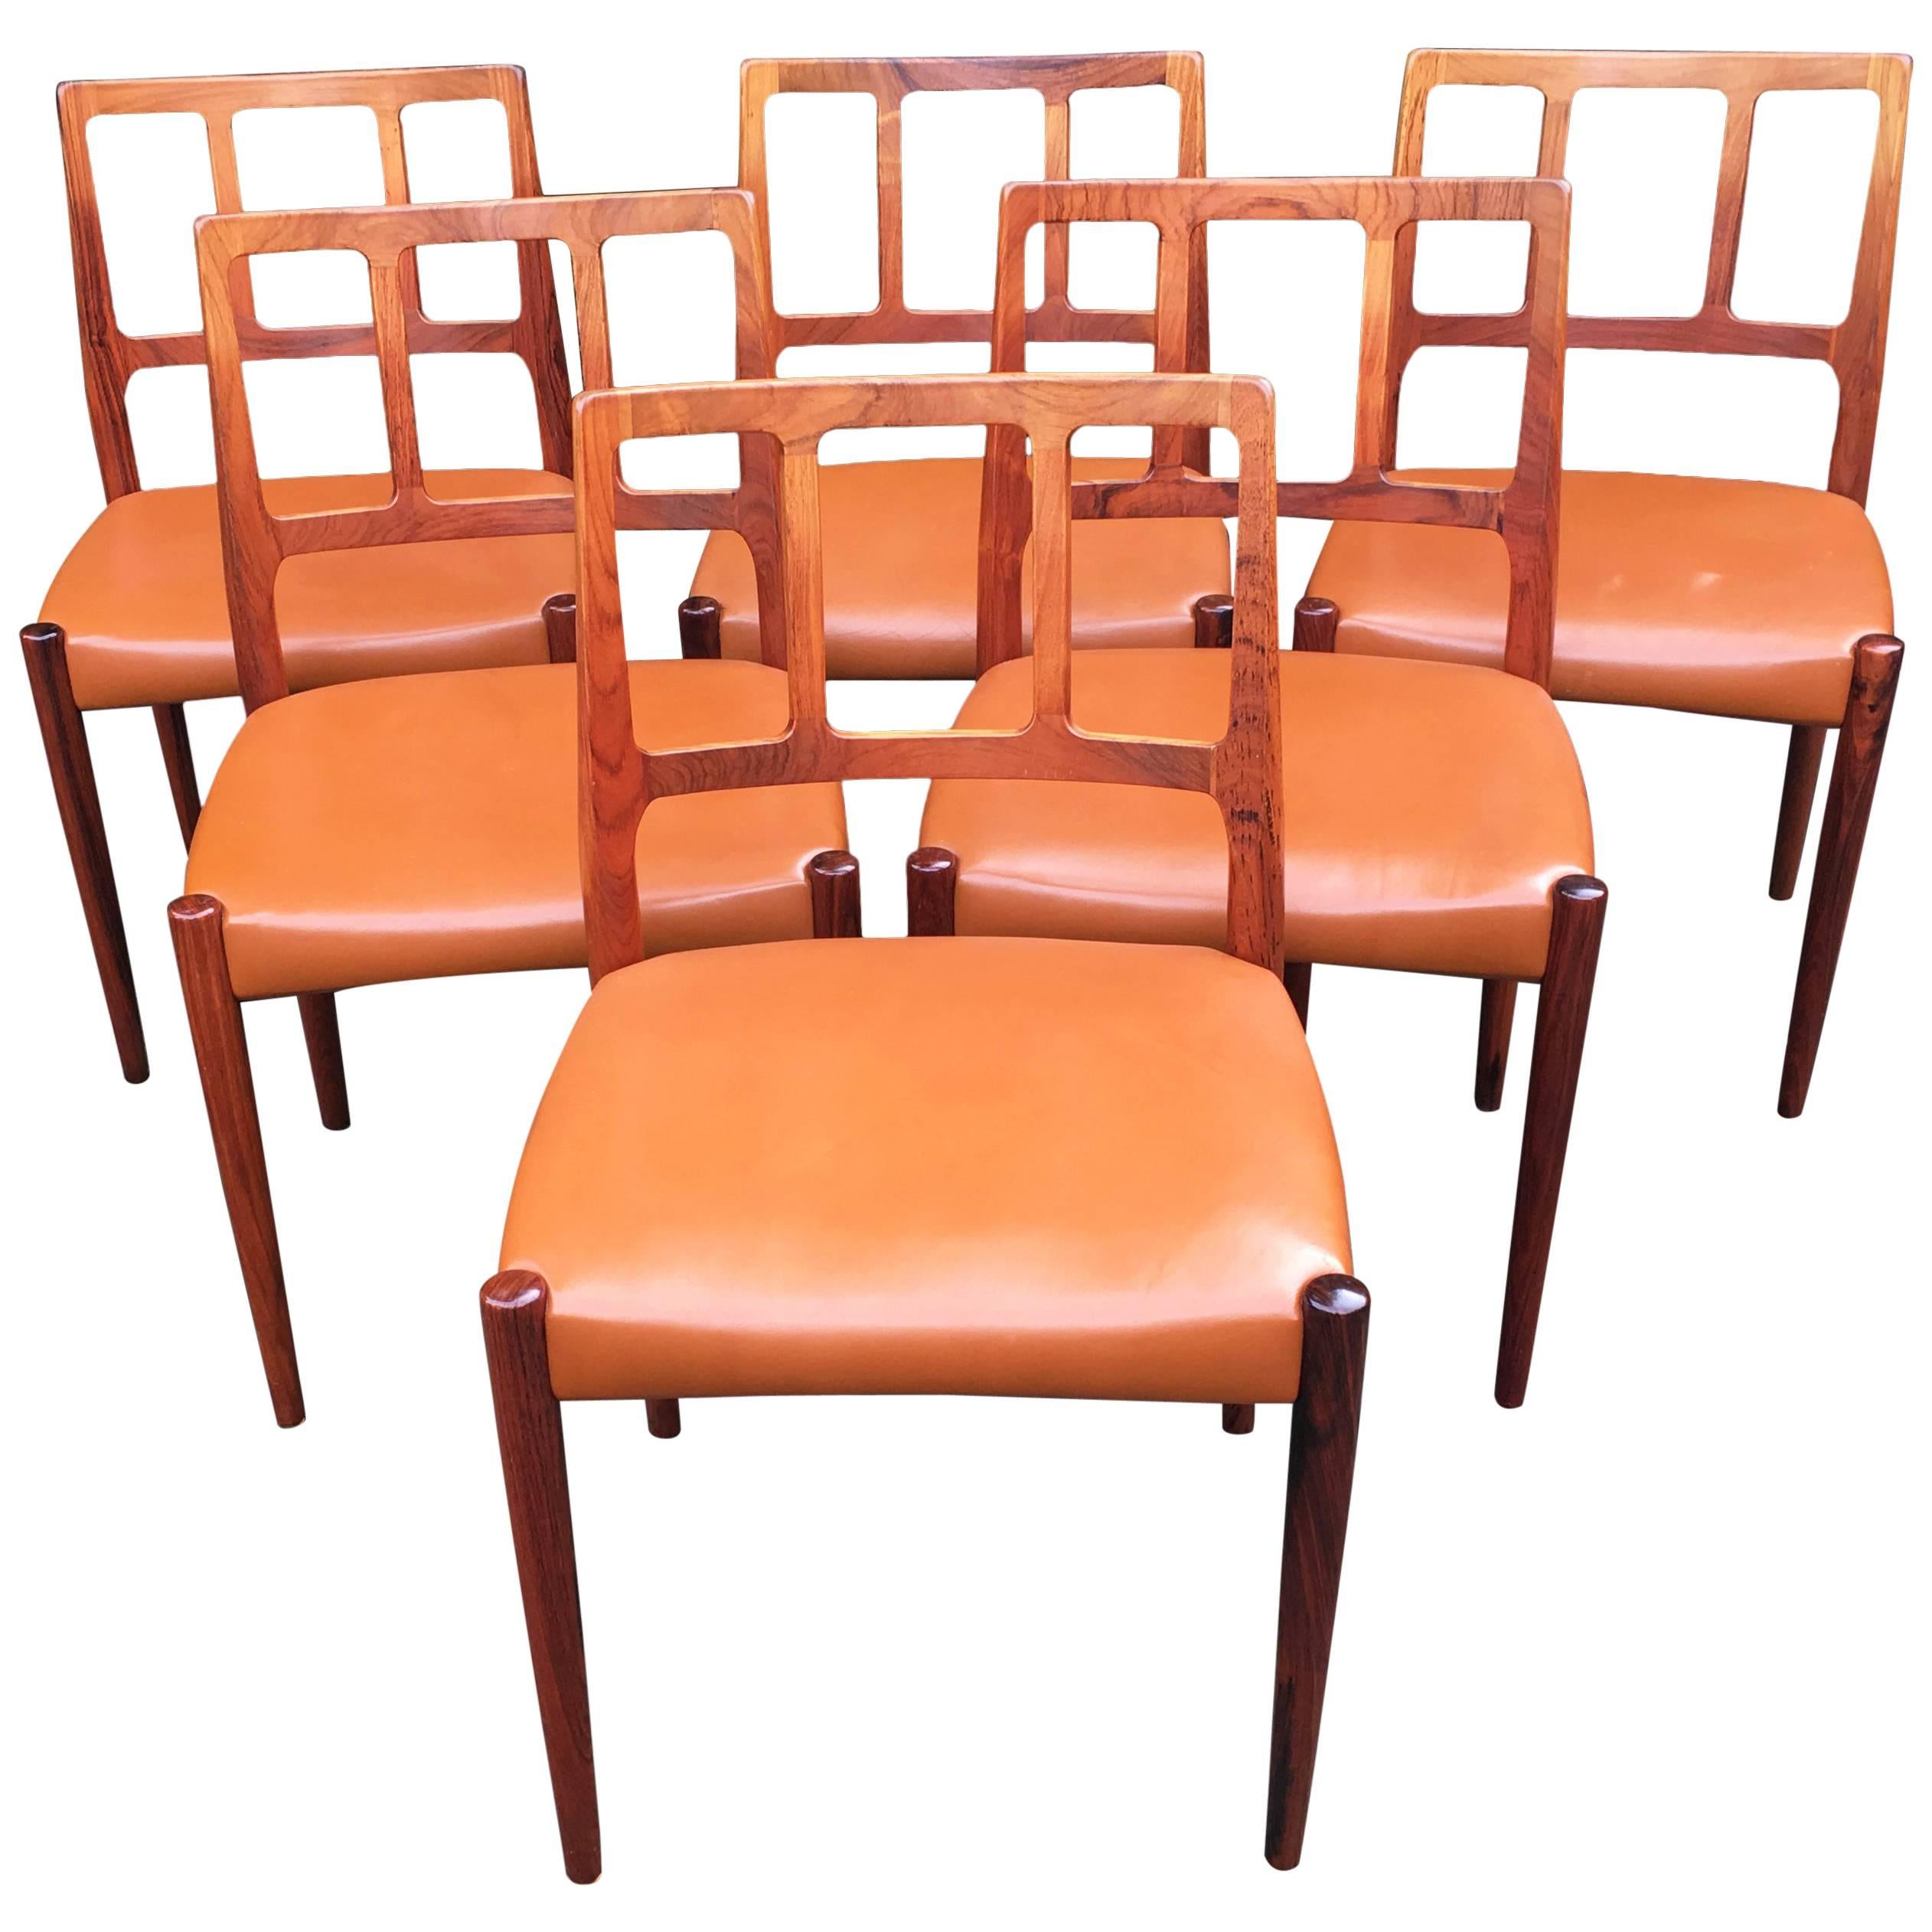 Six Rosewood Dining Chairs by Johannes Andersen for Uldum Møbelfabrik